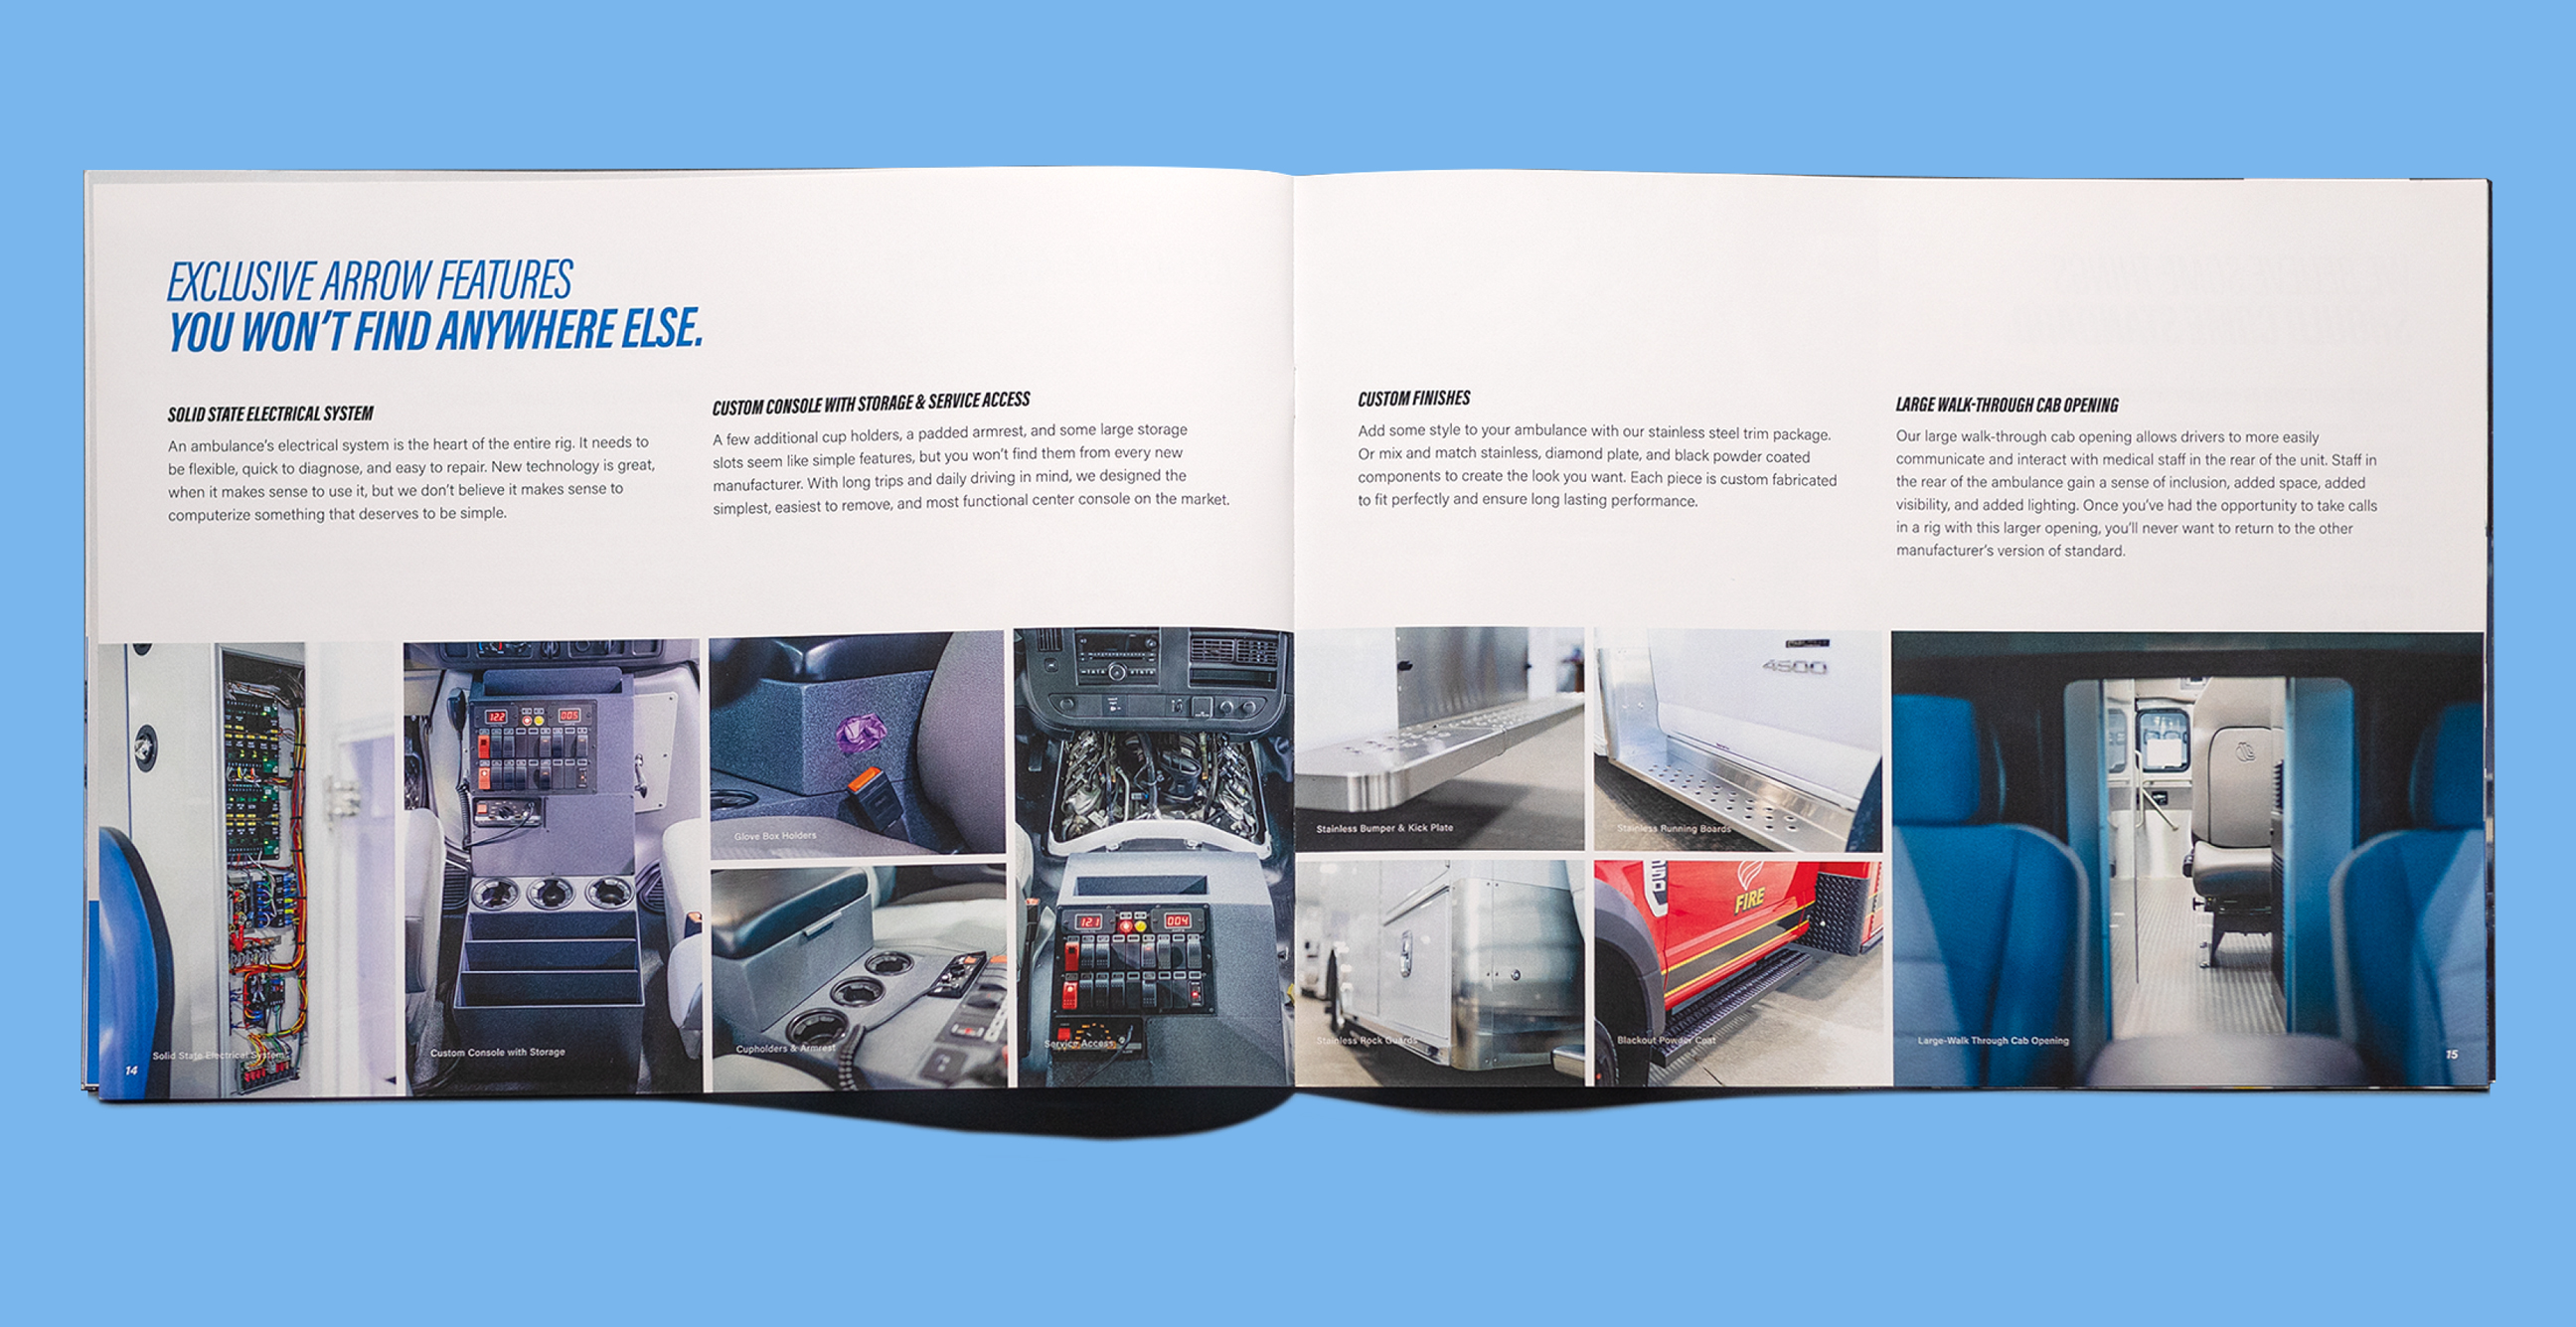 Image of Product & Service Catalog pg 15-16 on blue background